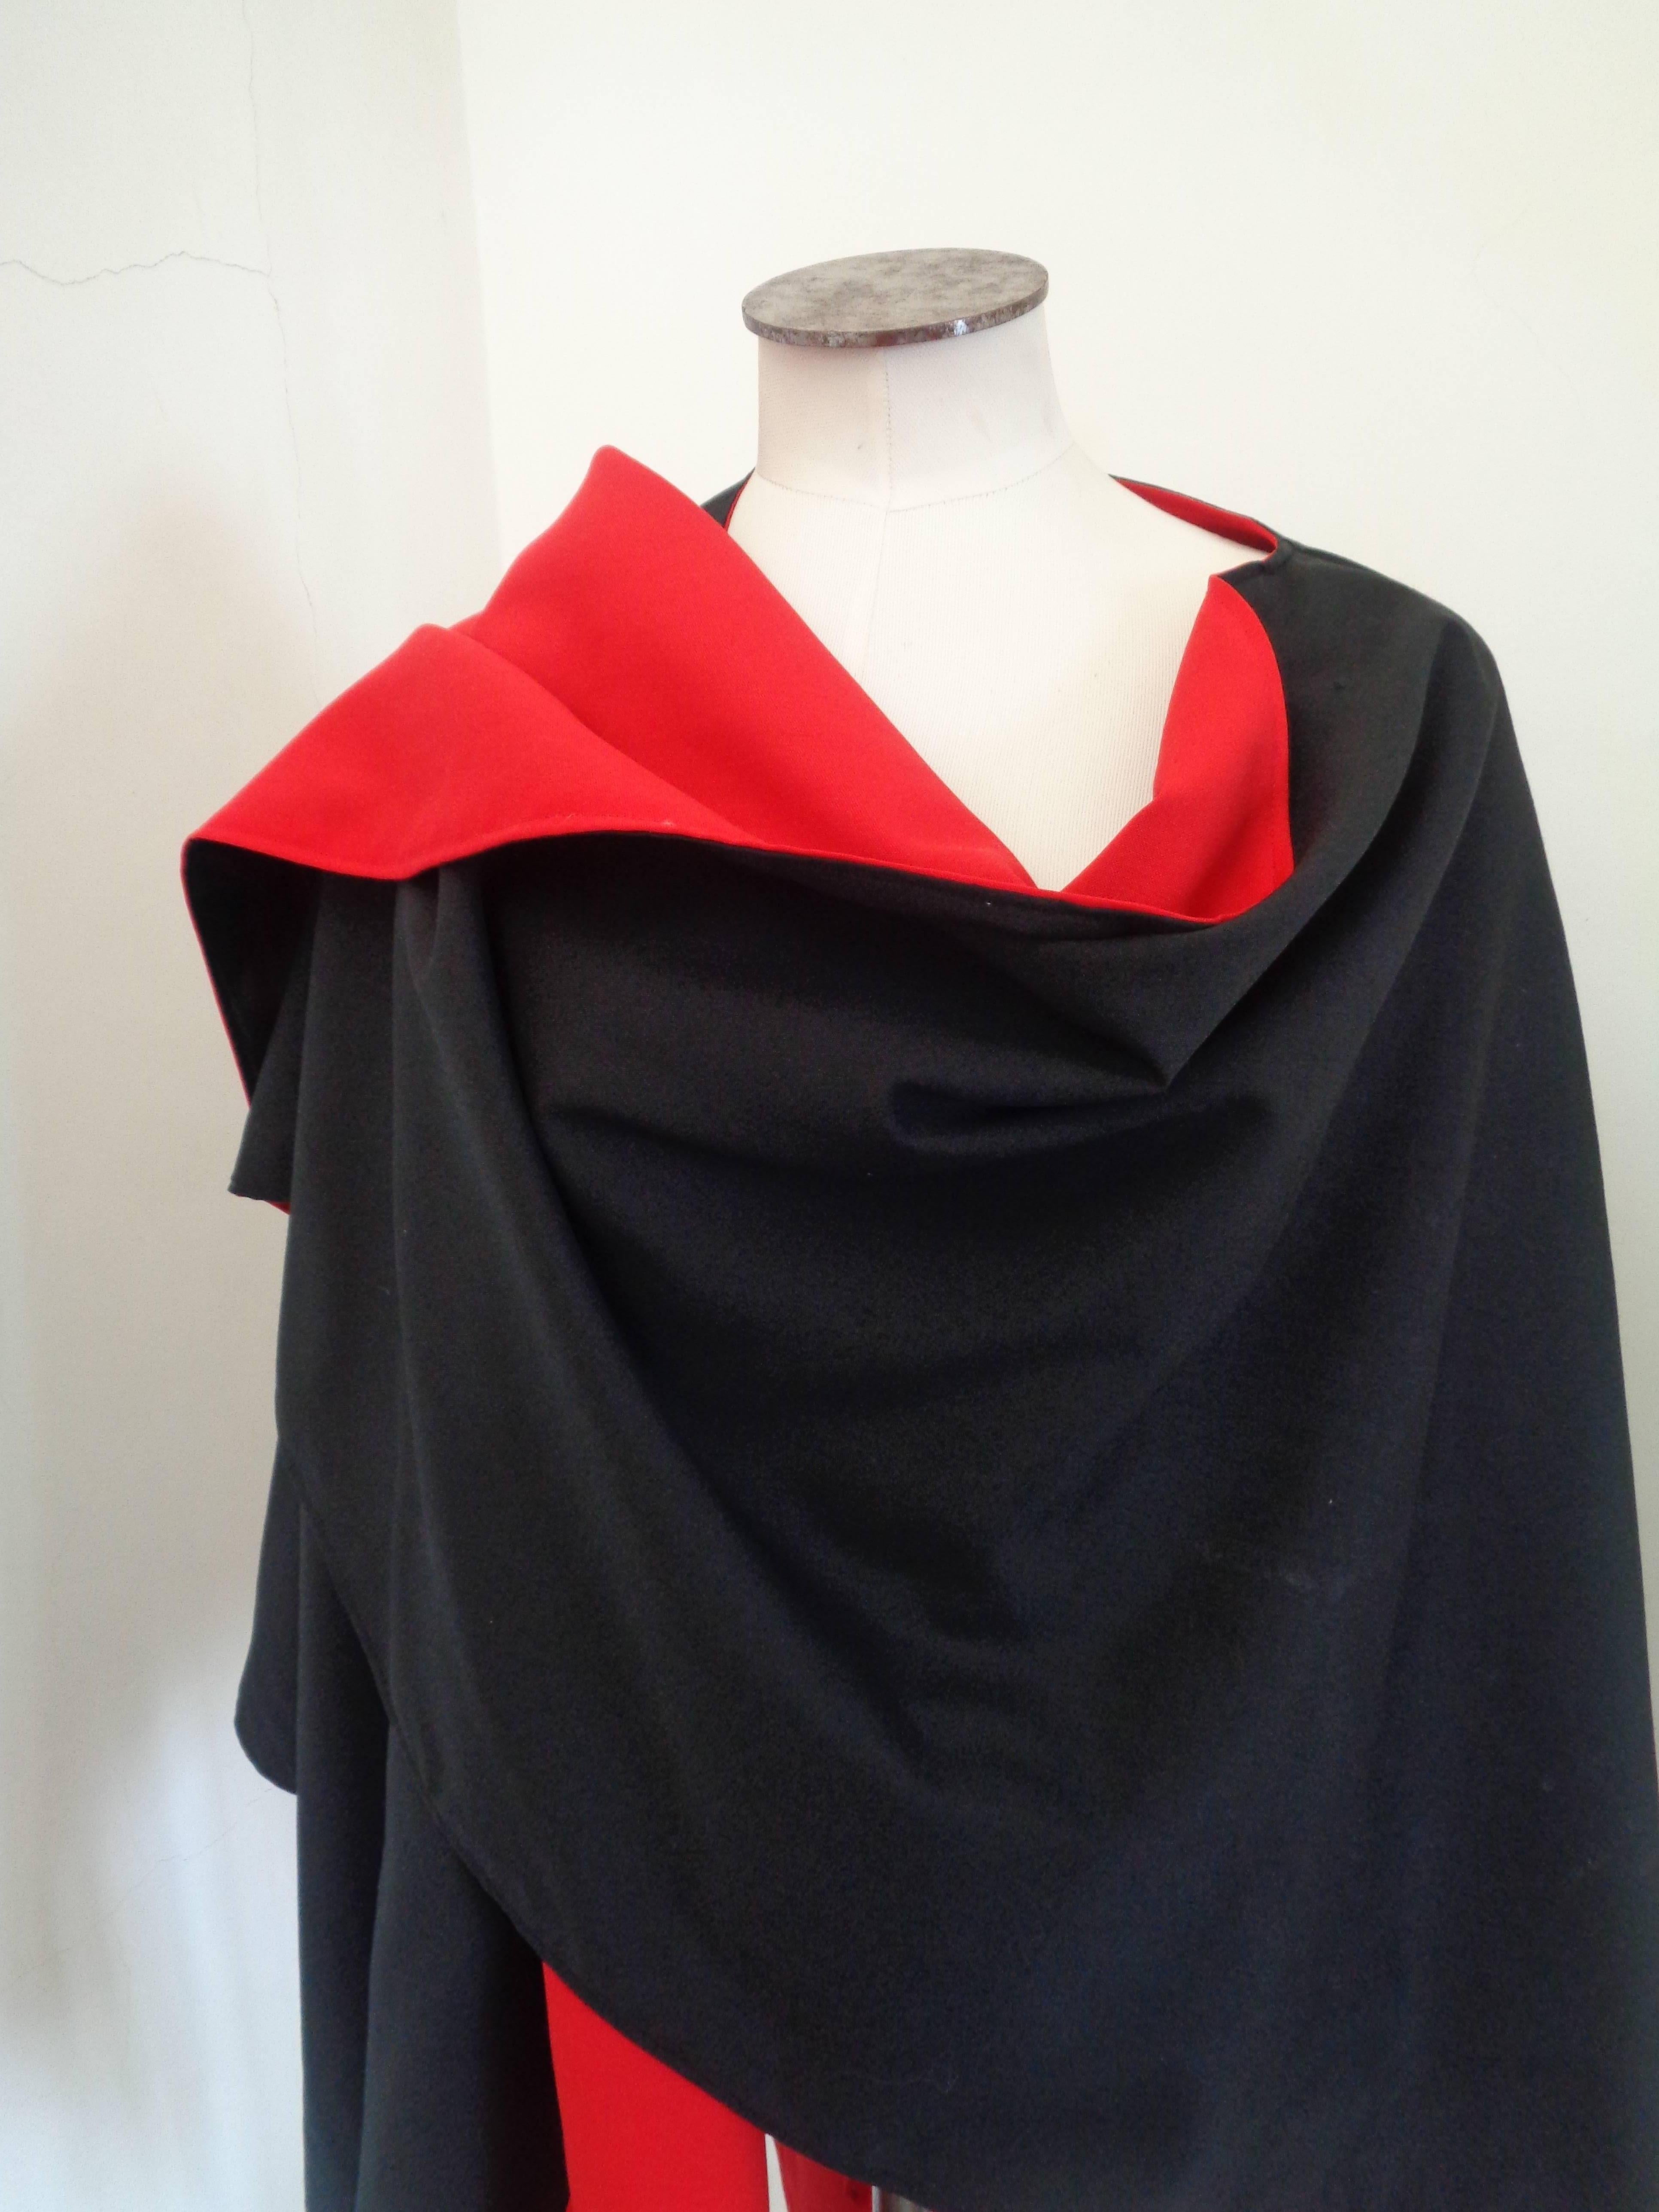 red and black cloak